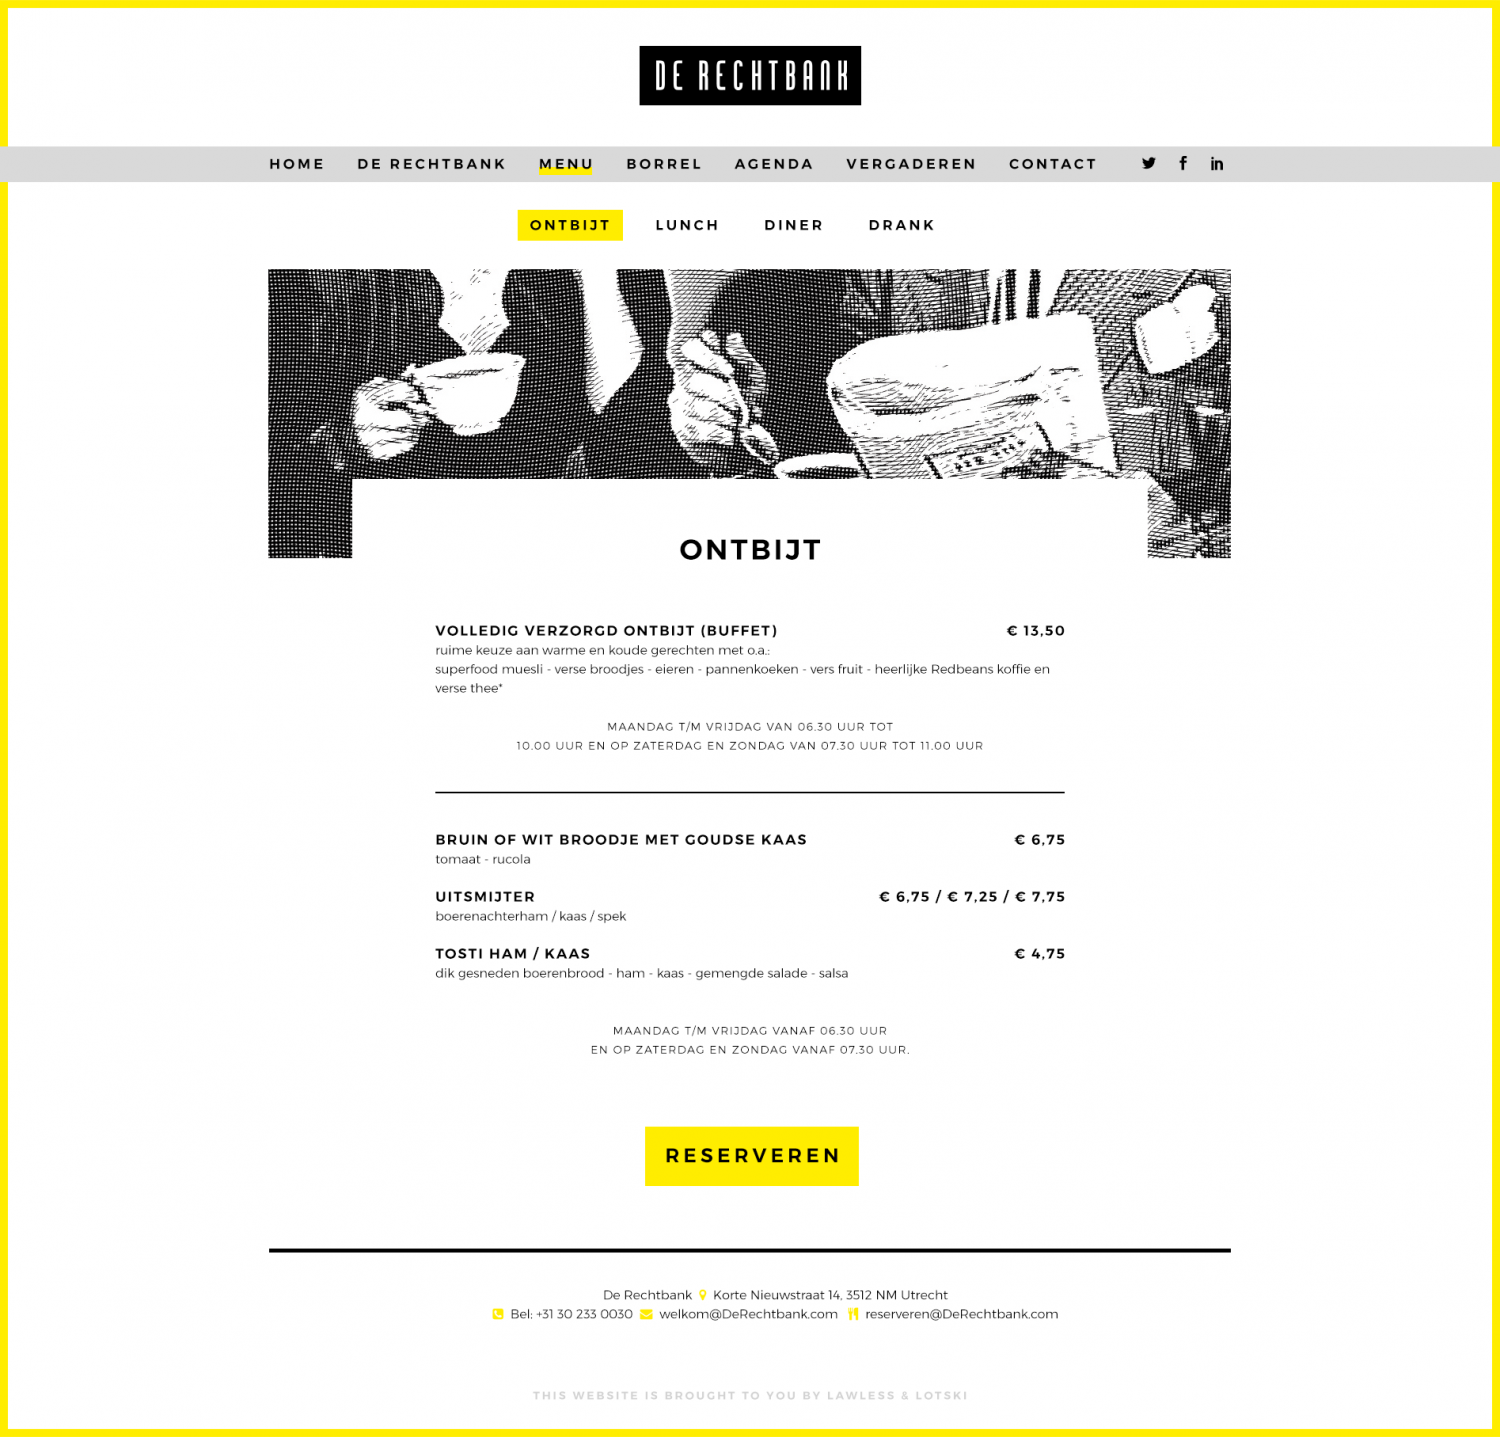 Derechtbank website menu